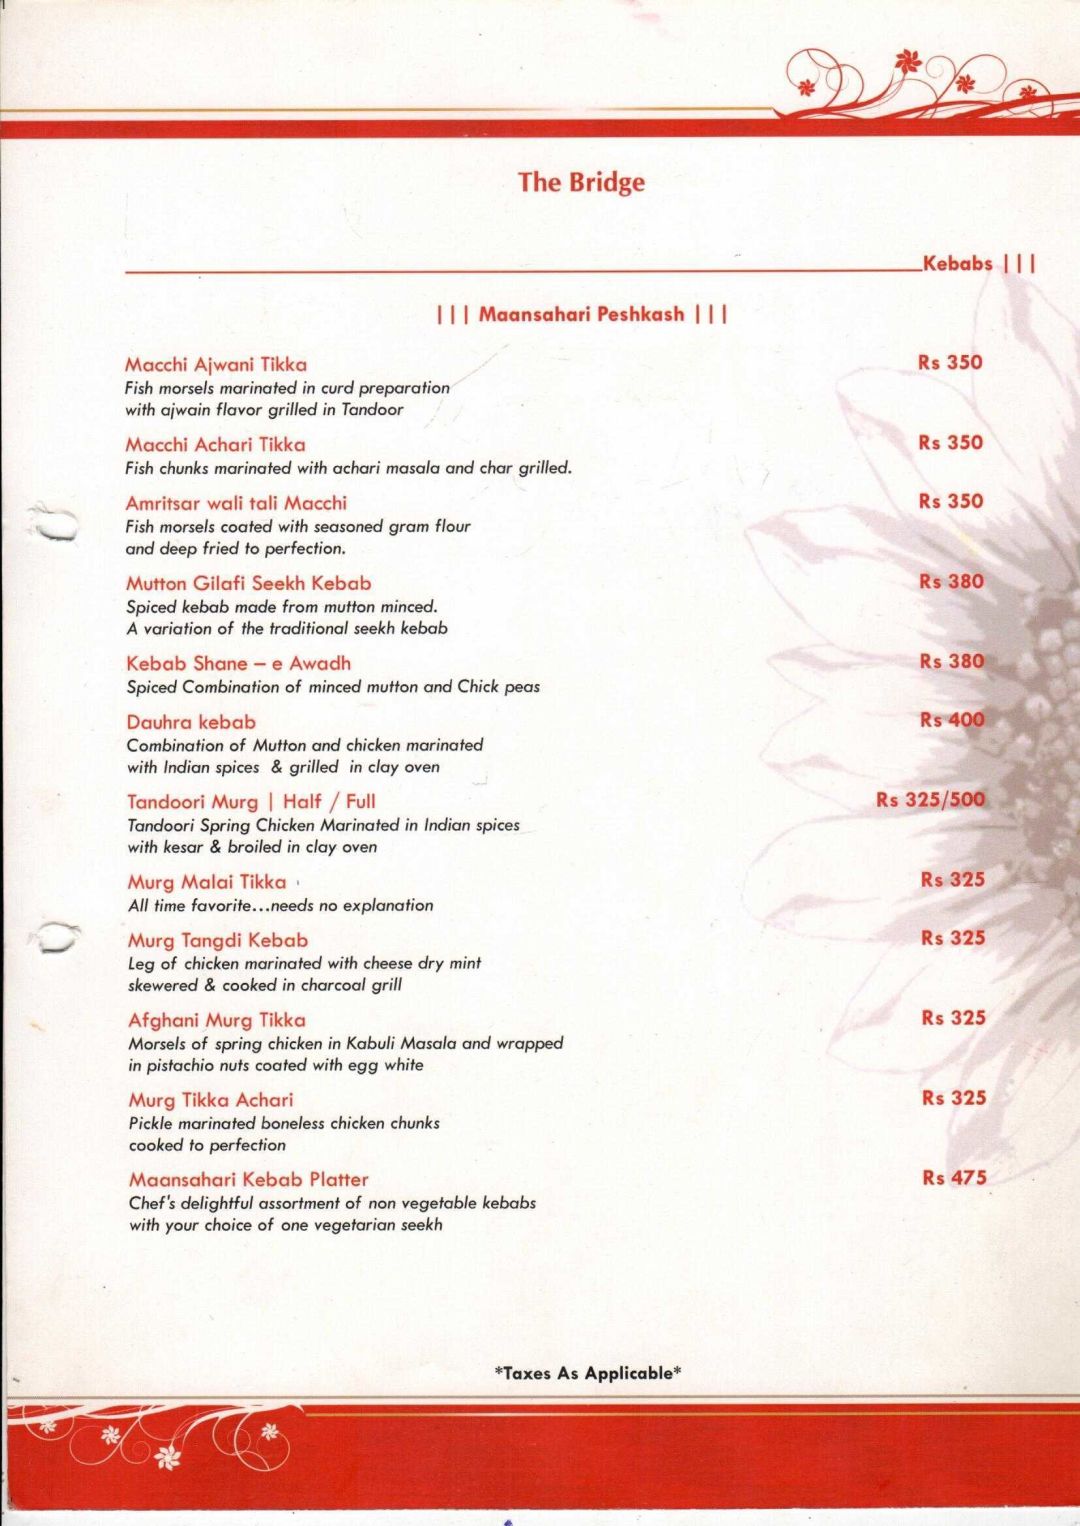 clarks inn restaurant menu